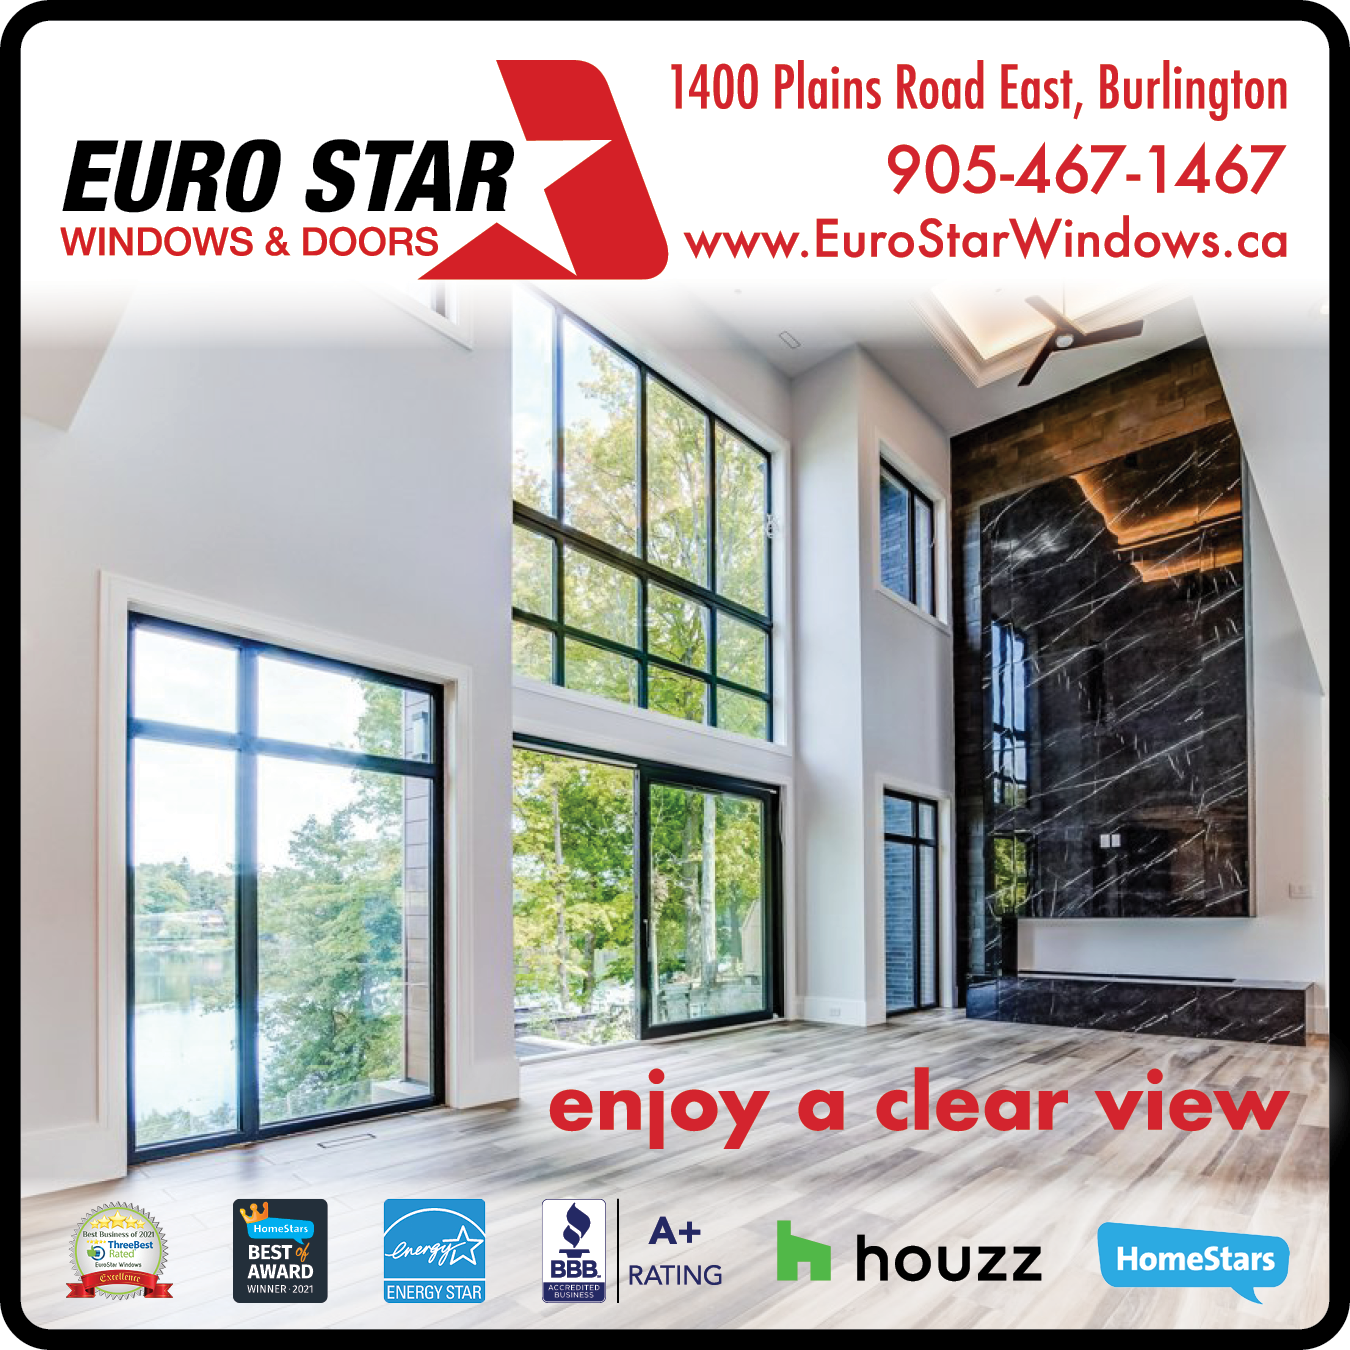 Euro Star Windows